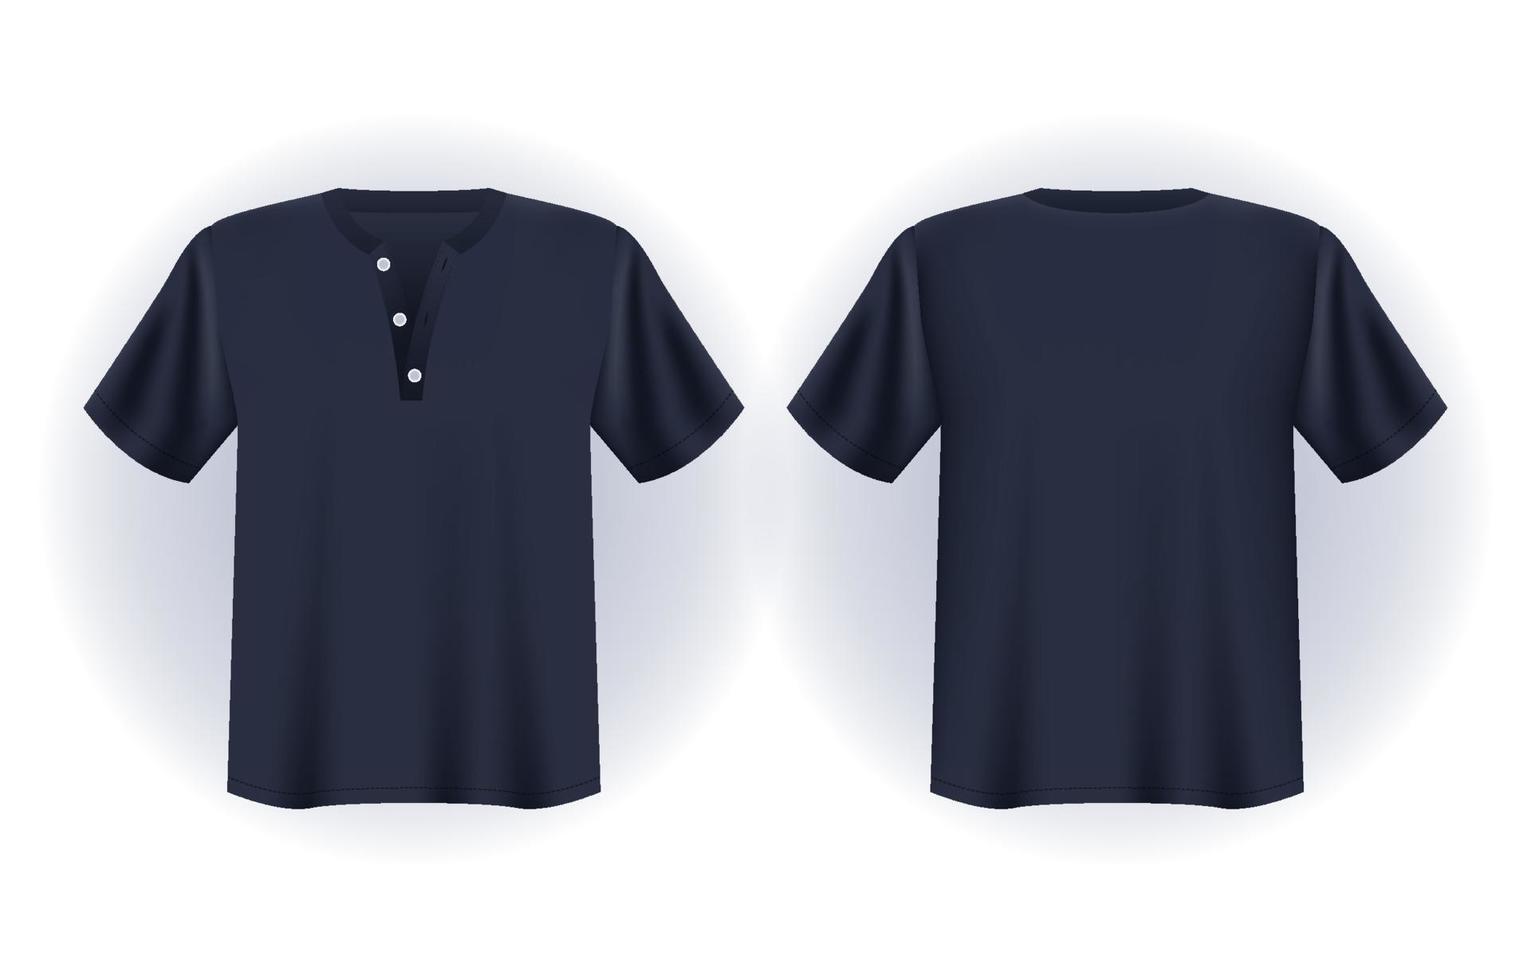 maquete de camiseta preta henley 3d vetor